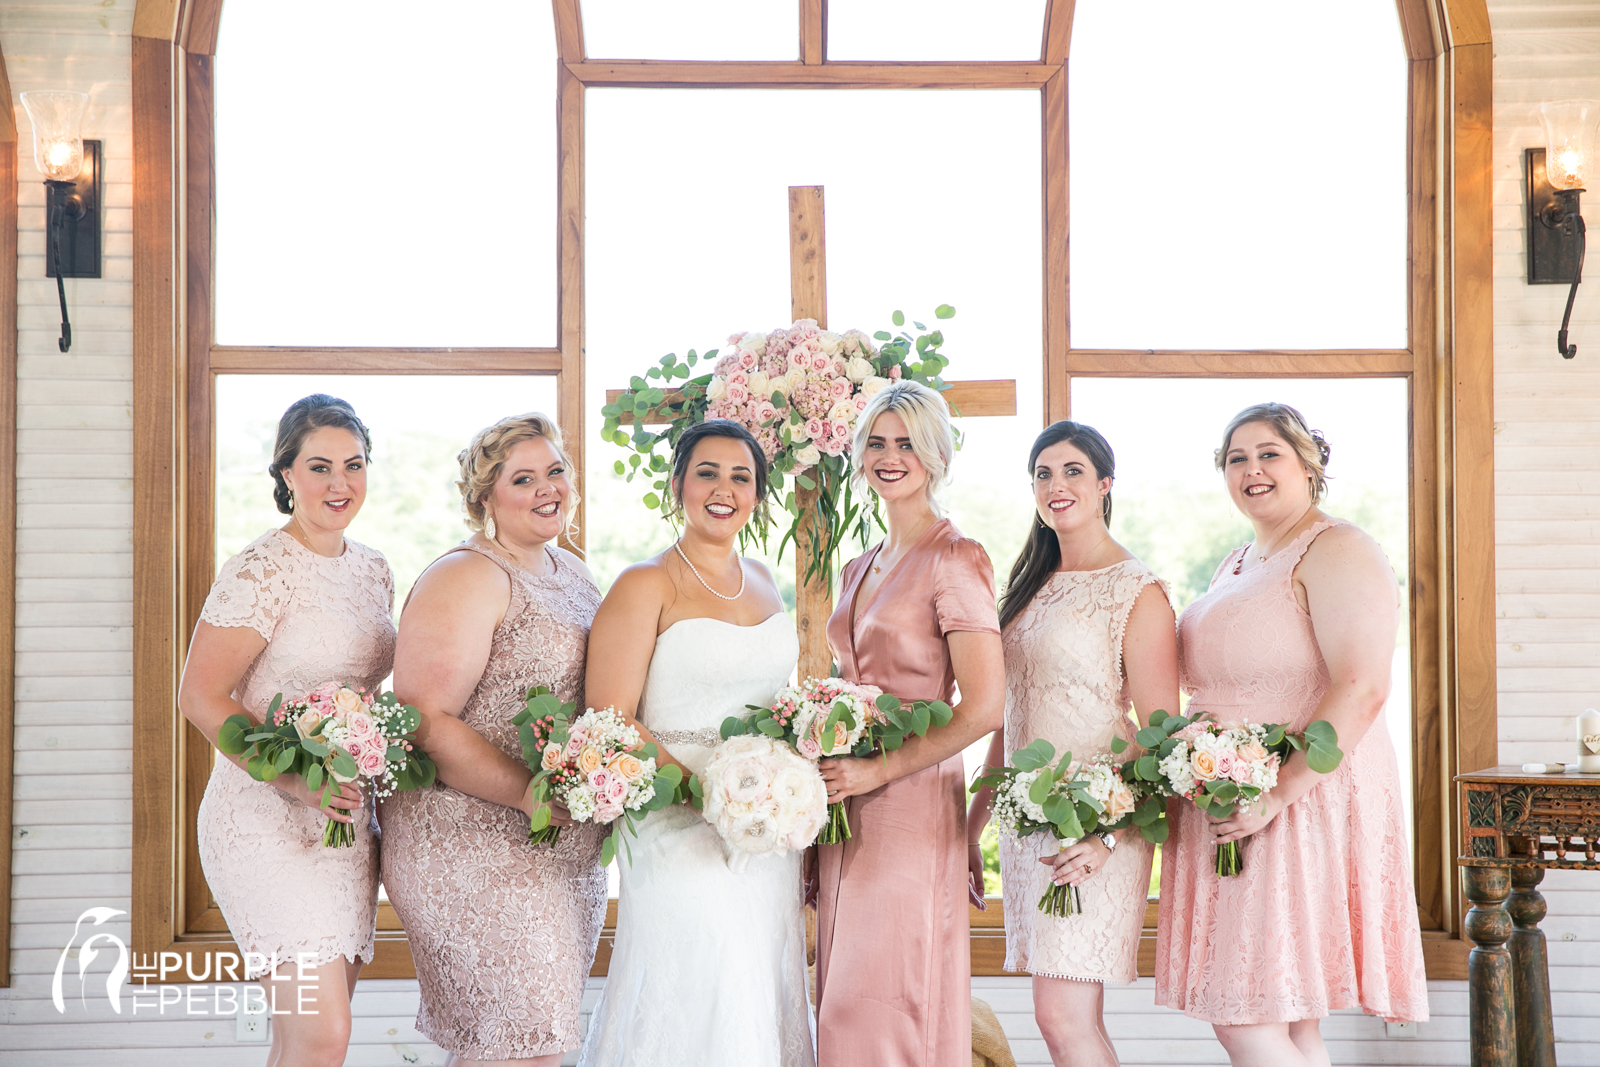 Multi Colored Bridesmaids Dresses